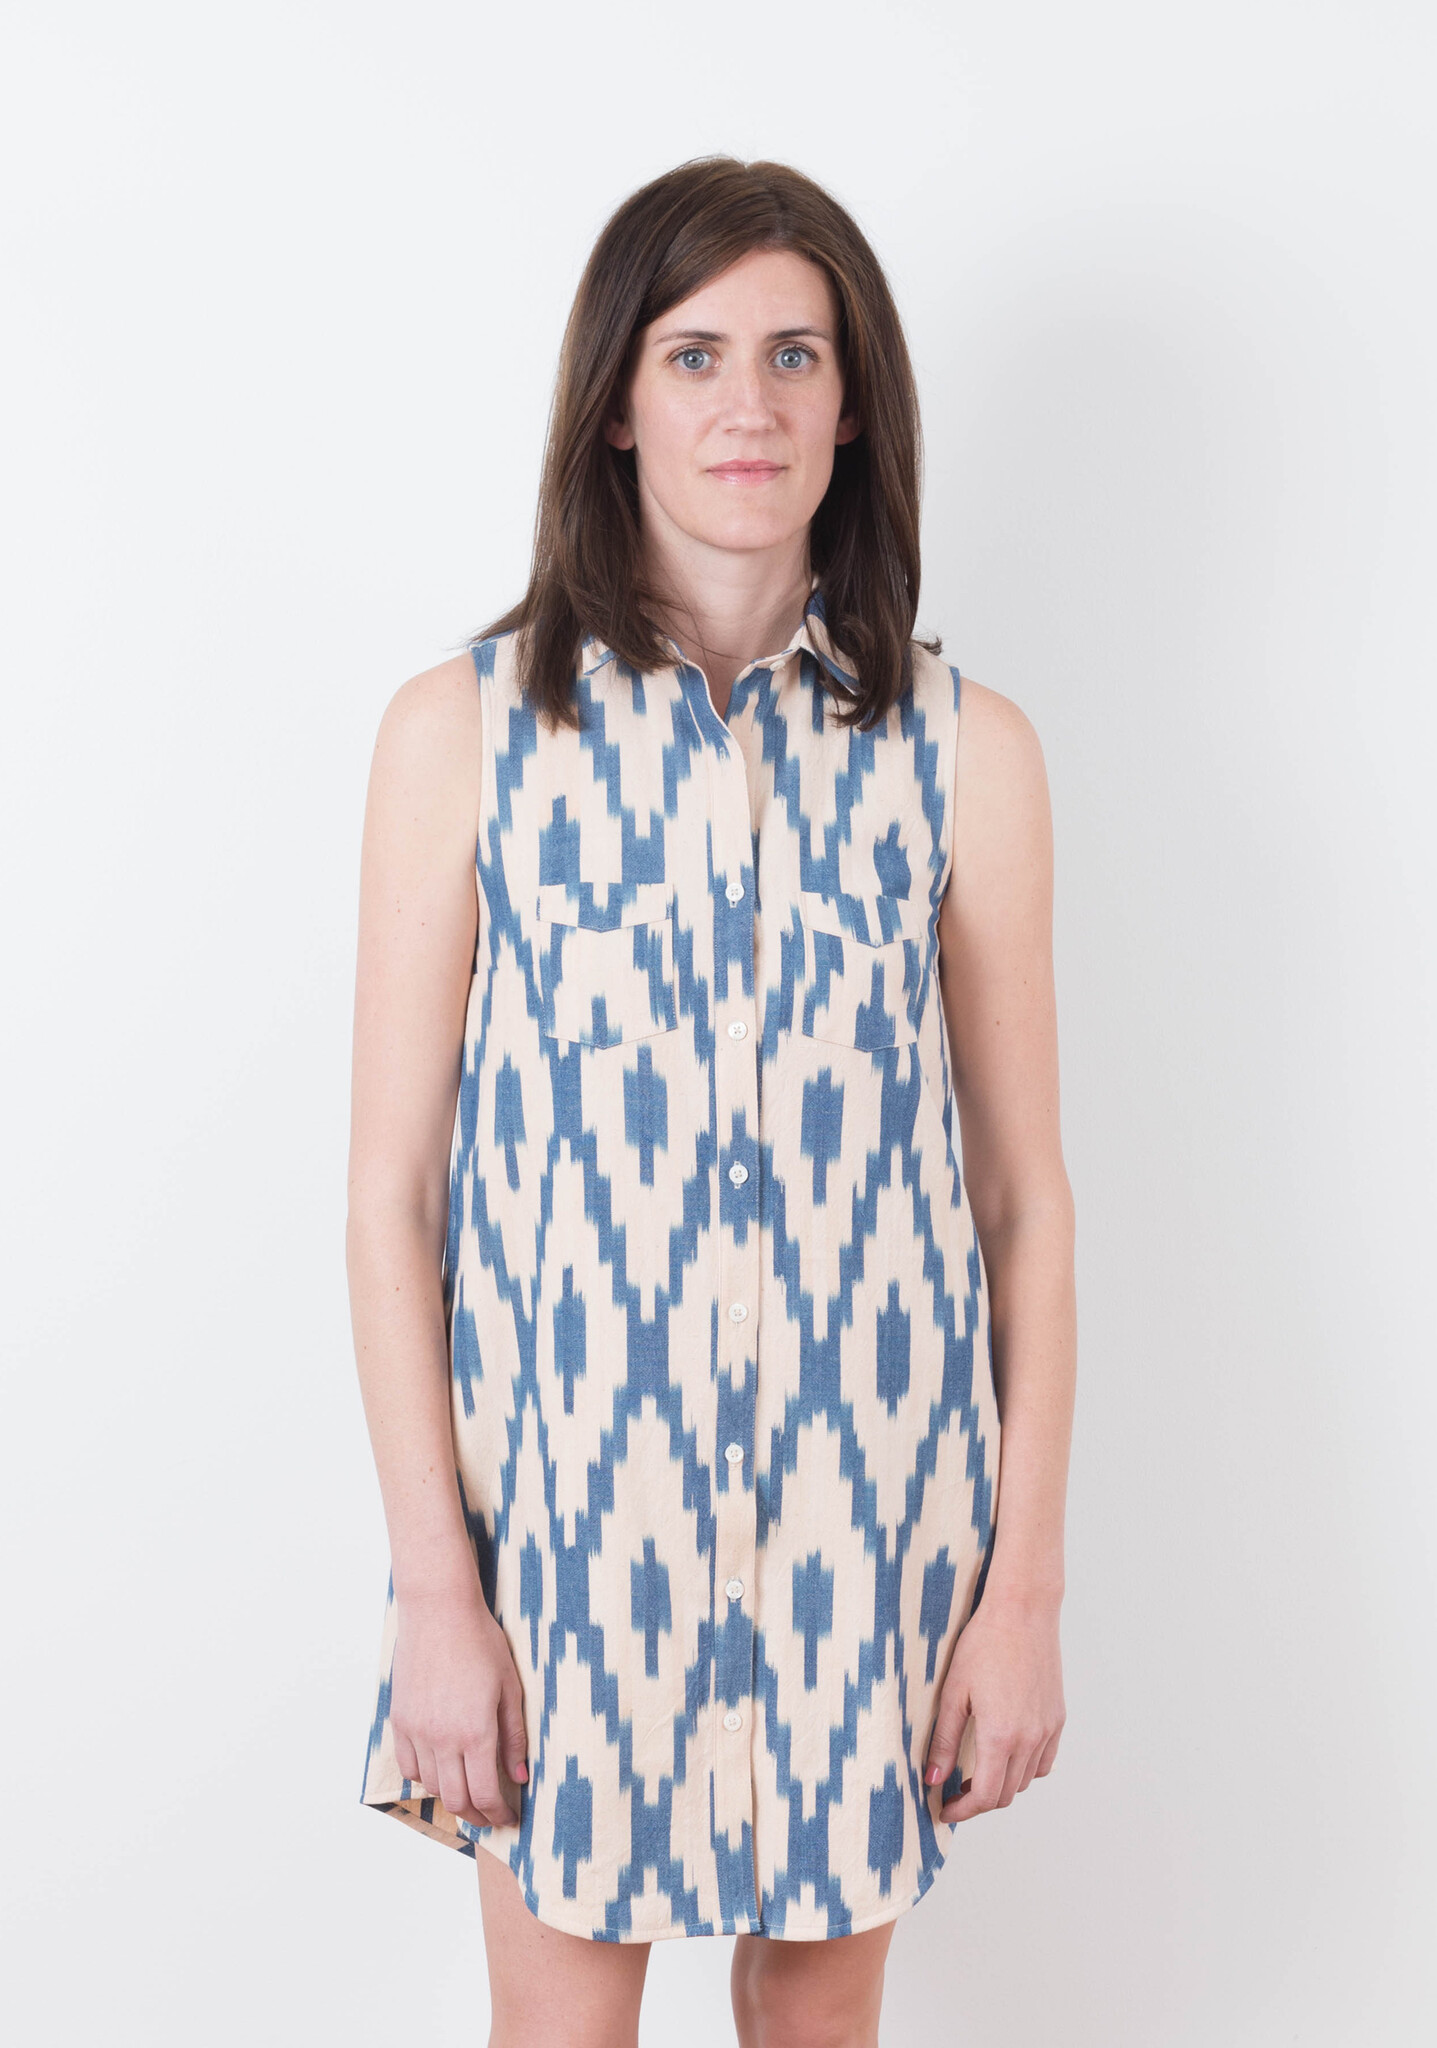 Sewing Pattern Review: Grainline Studio Alder Shirt Dress